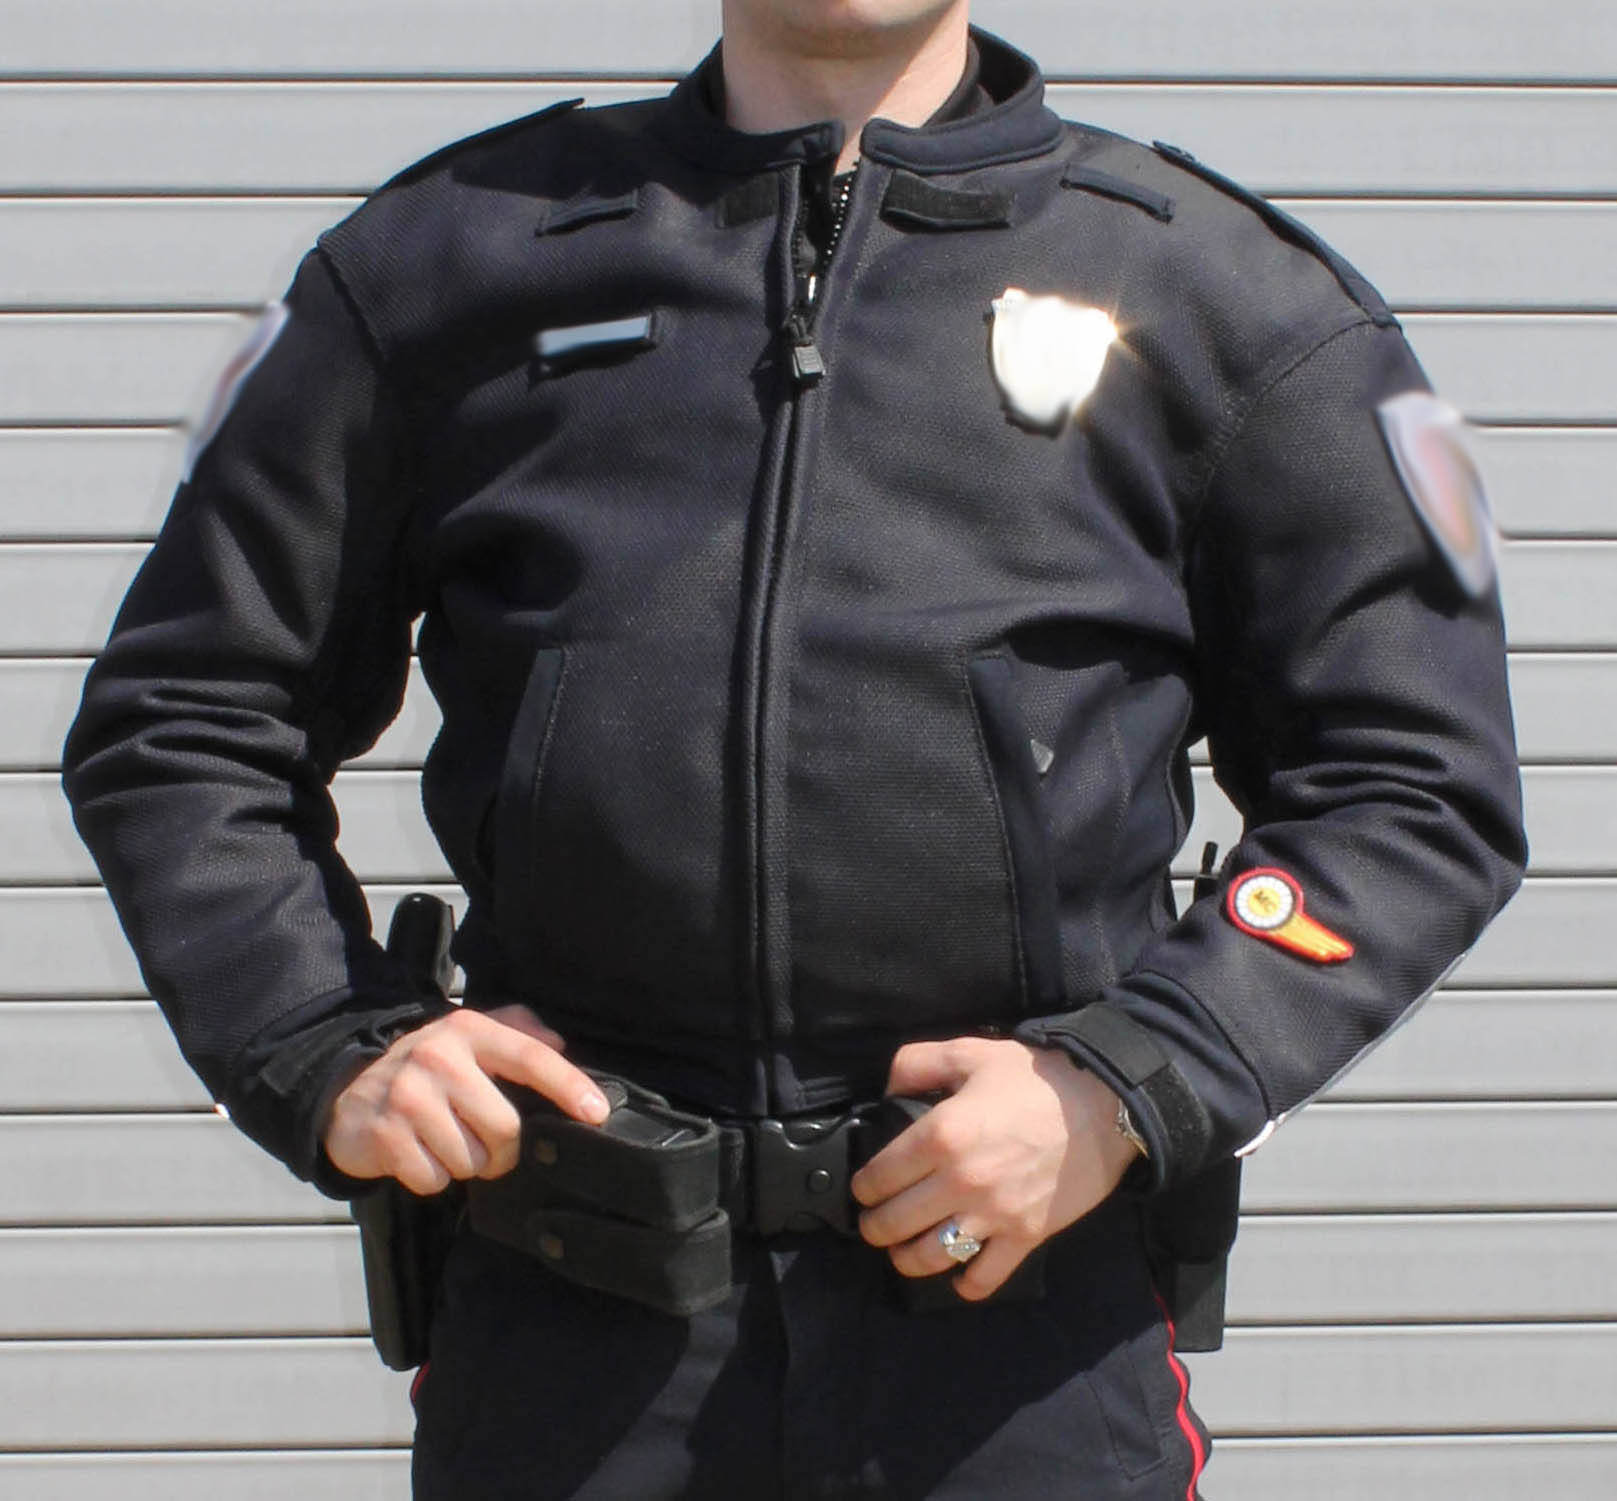 Police Air Mesh Jacket | Motoport USA